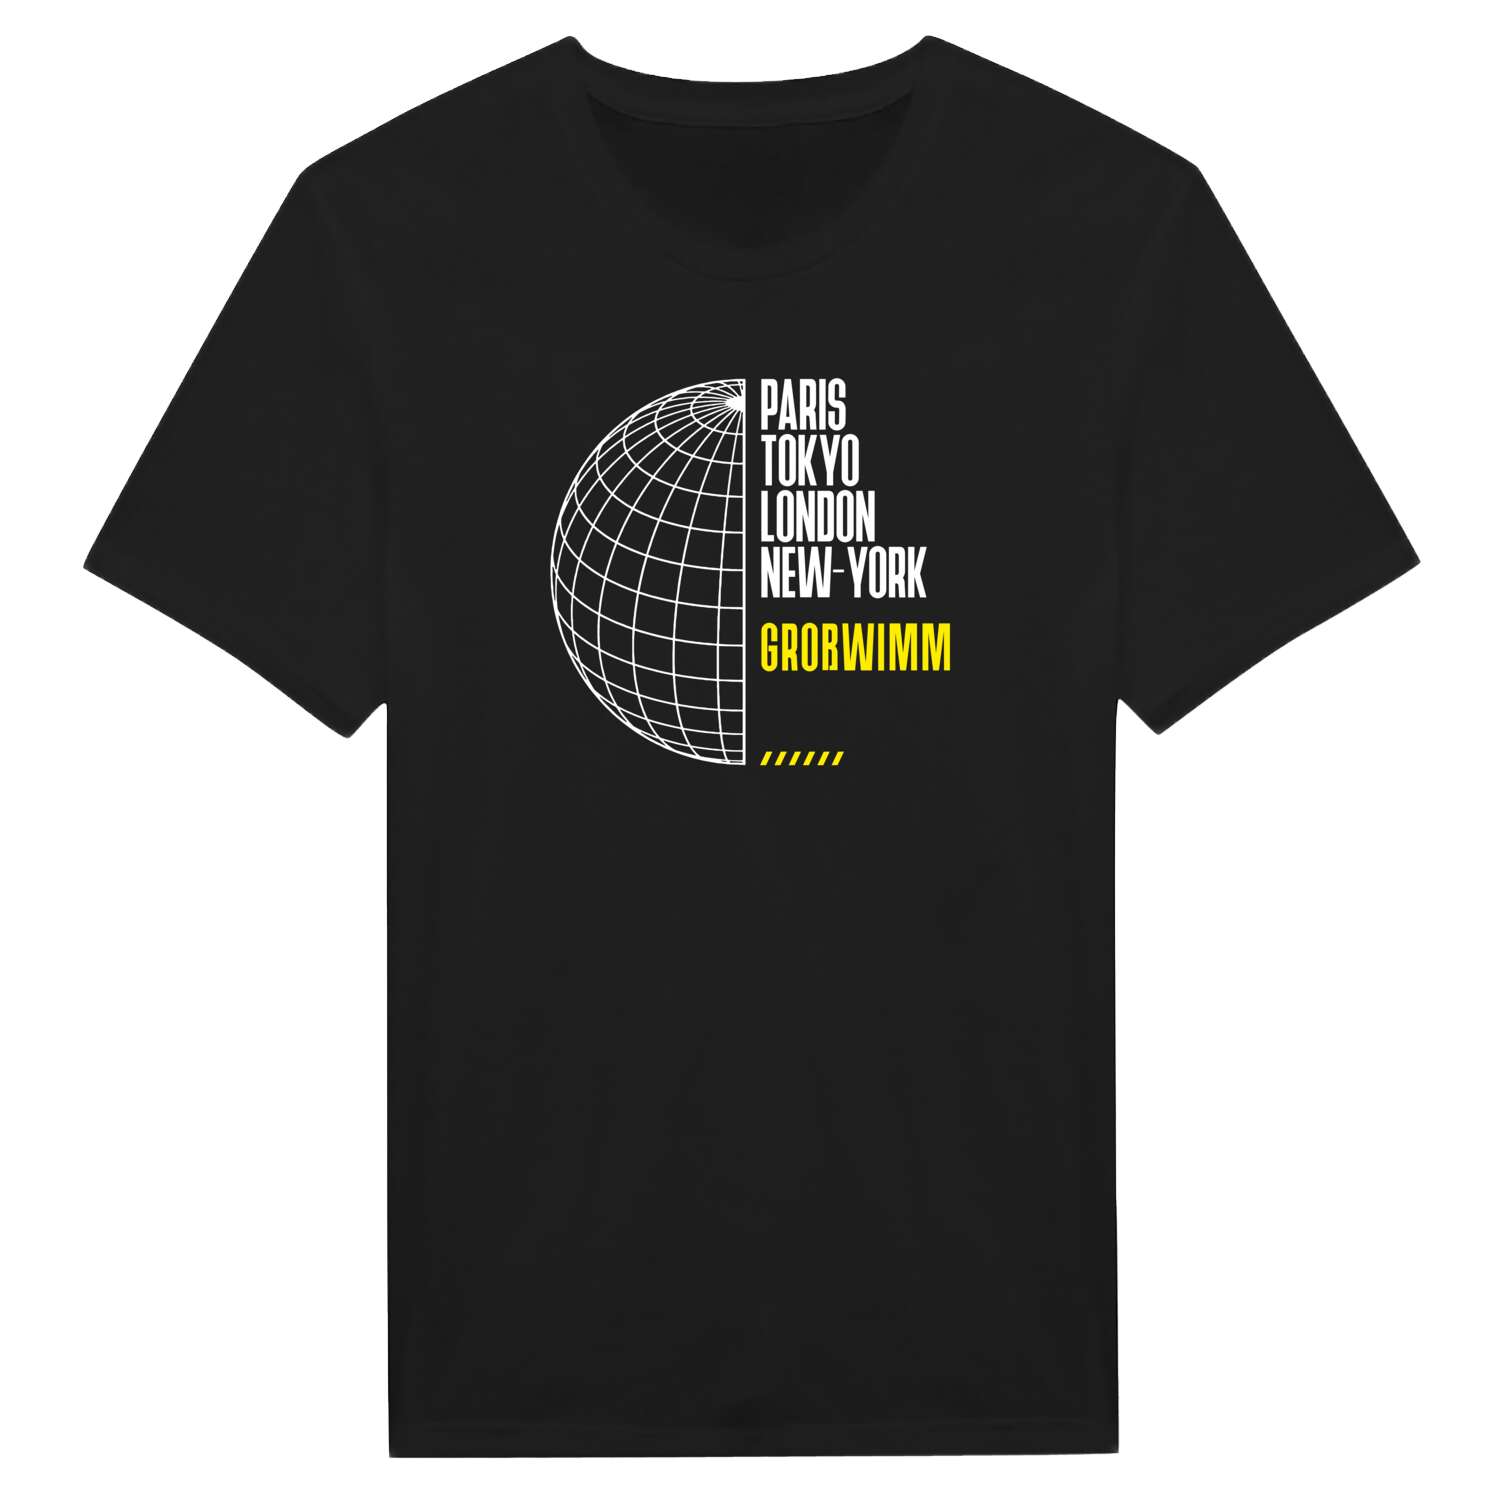 Großwimm T-Shirt »Paris Tokyo London«